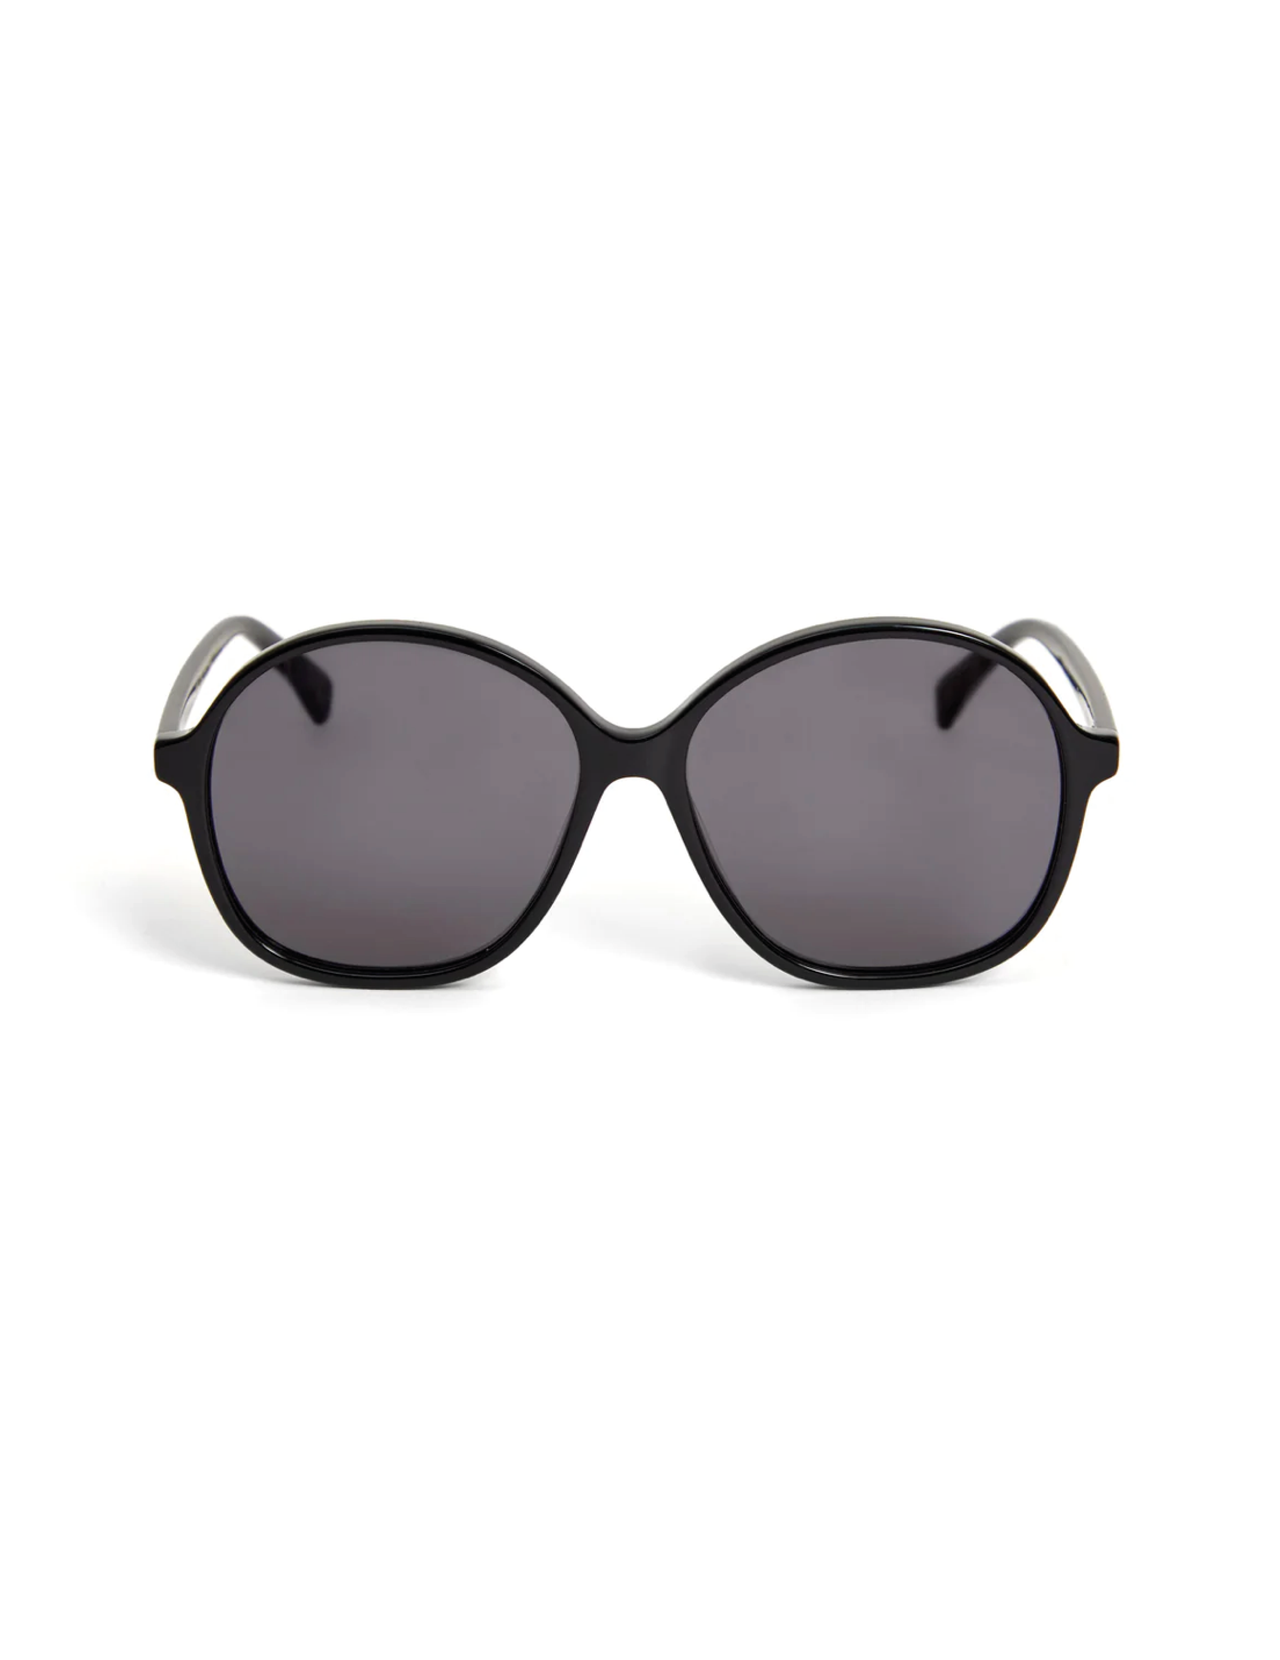 Clare V - Jane sunglasses black